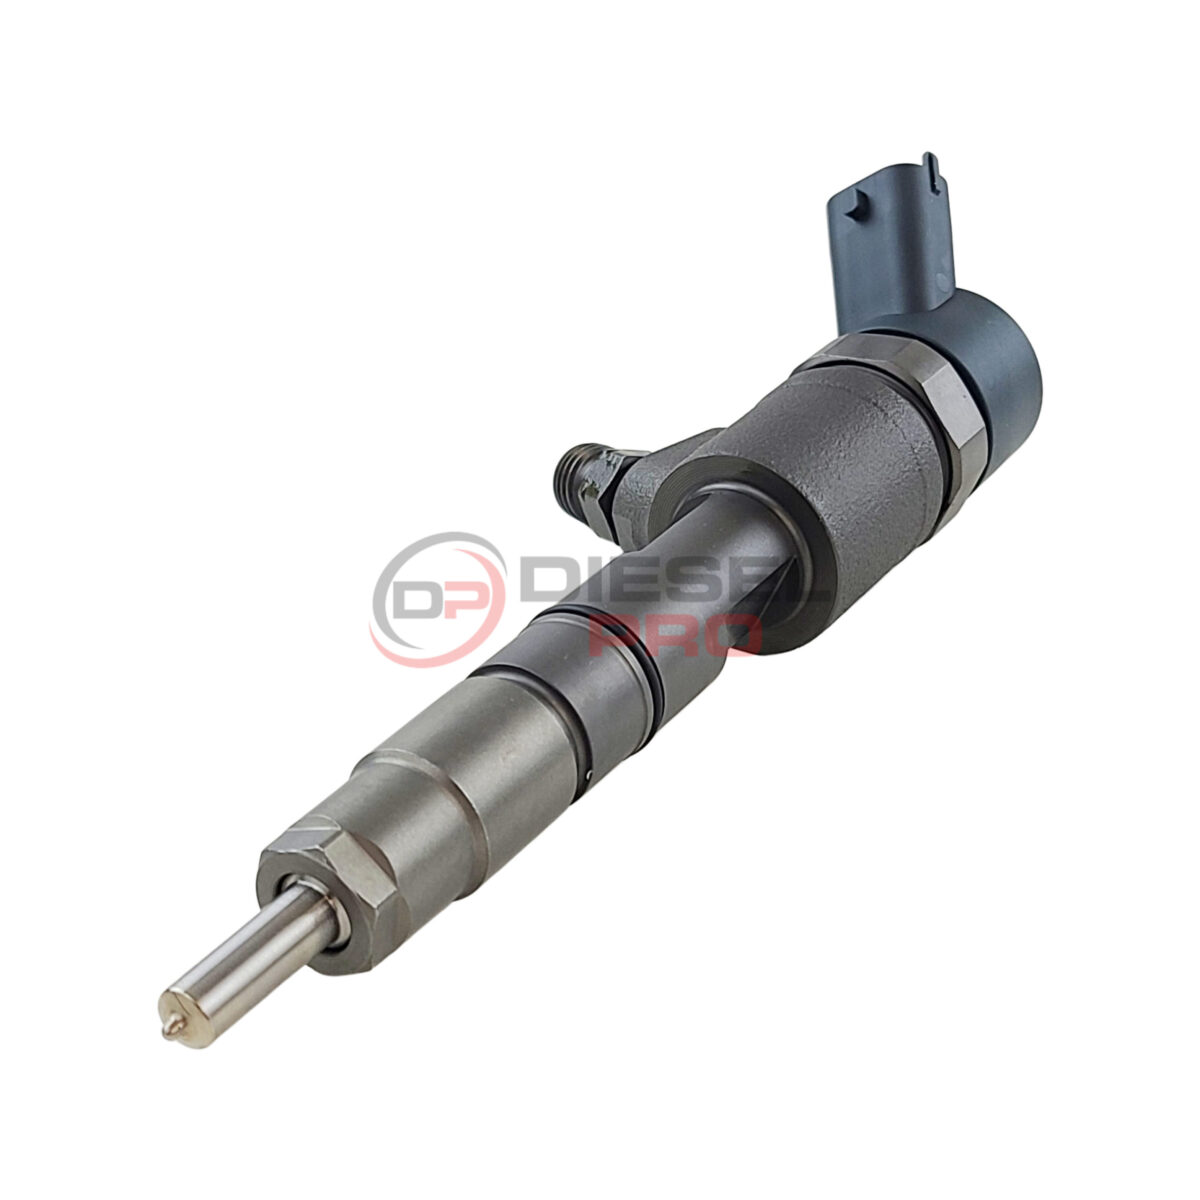 7029211 | Bosch Genuine Fuel Injector for Bobcat